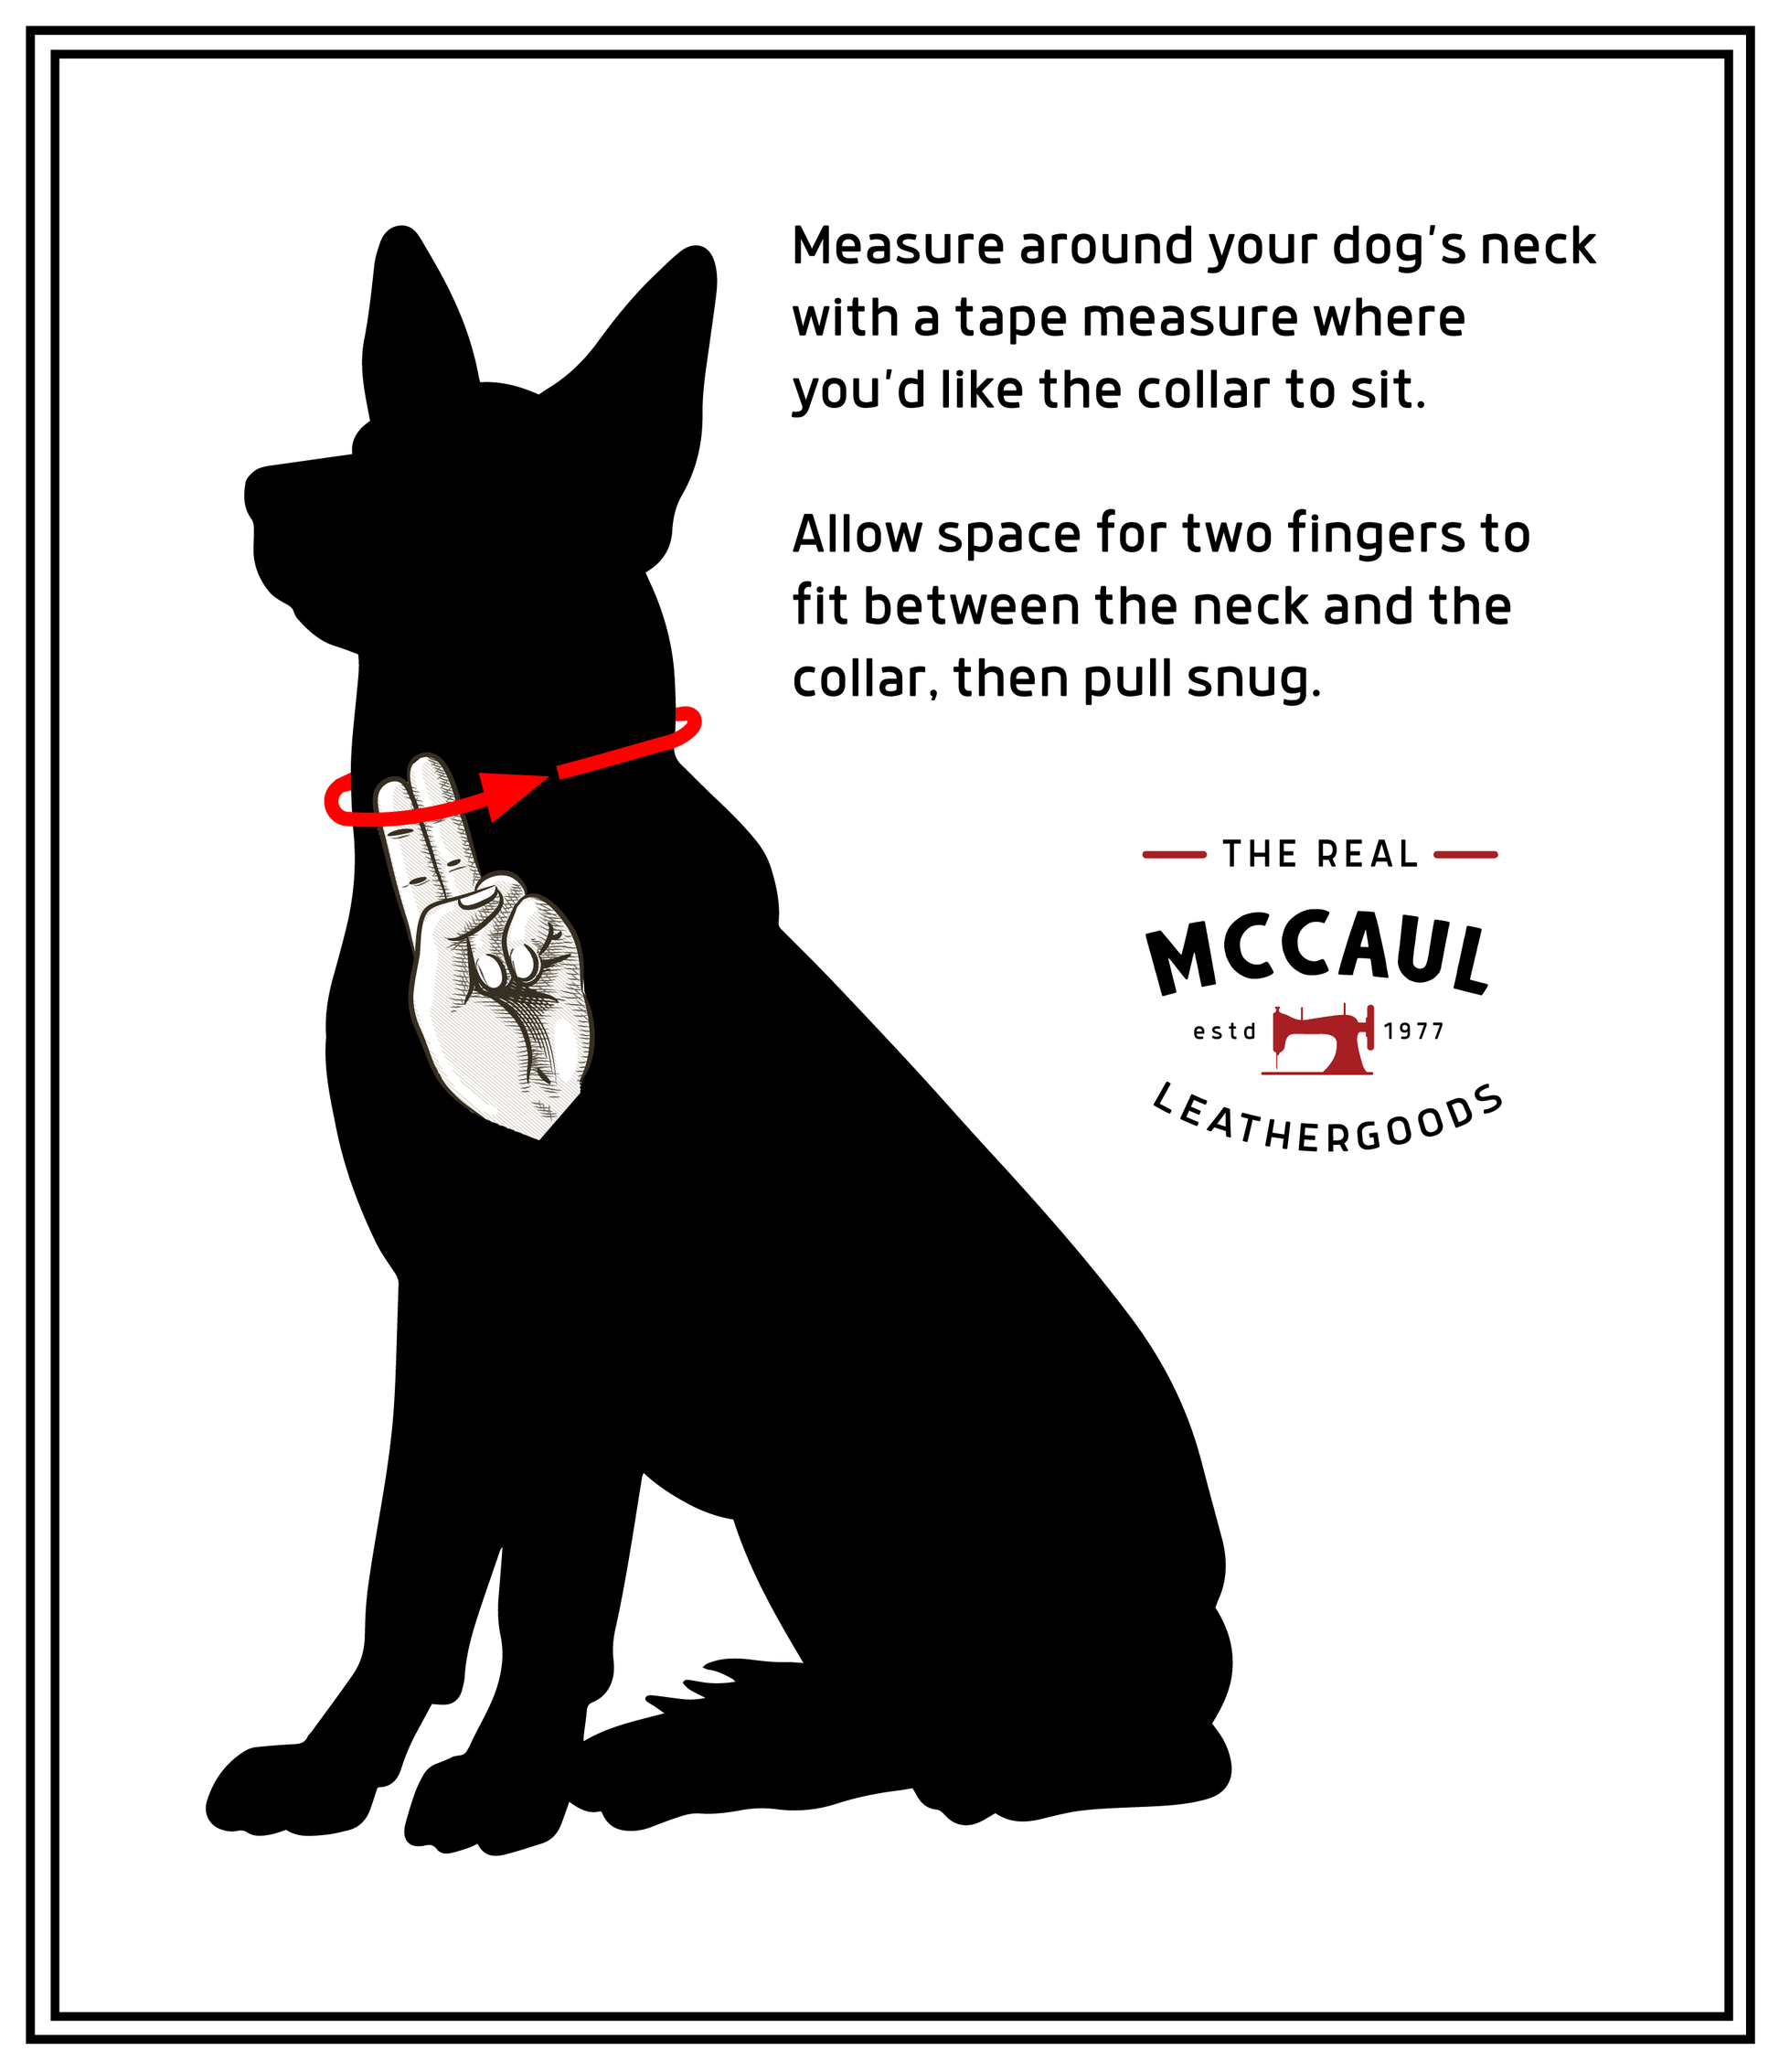 The Real McCaul Leathergoods Pet Collars & Harnesses Rancher Dog Collar - 38mm - Black Australian Made Australian Owned Leather Dog Collar with Brass Fittings- Australian Made